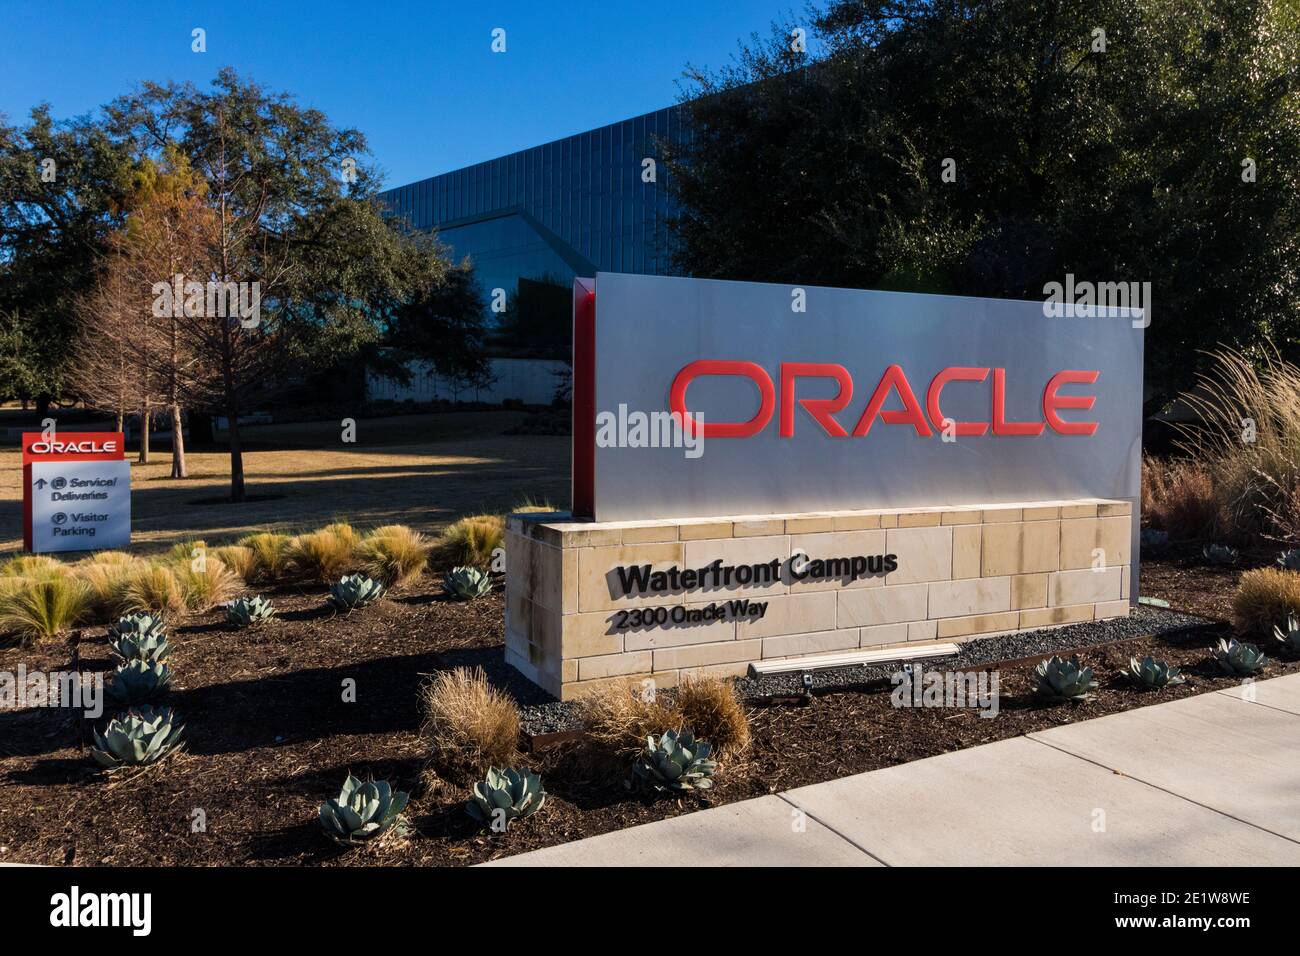 Oracle Waterfront Campus Austin Texas Stock Photo